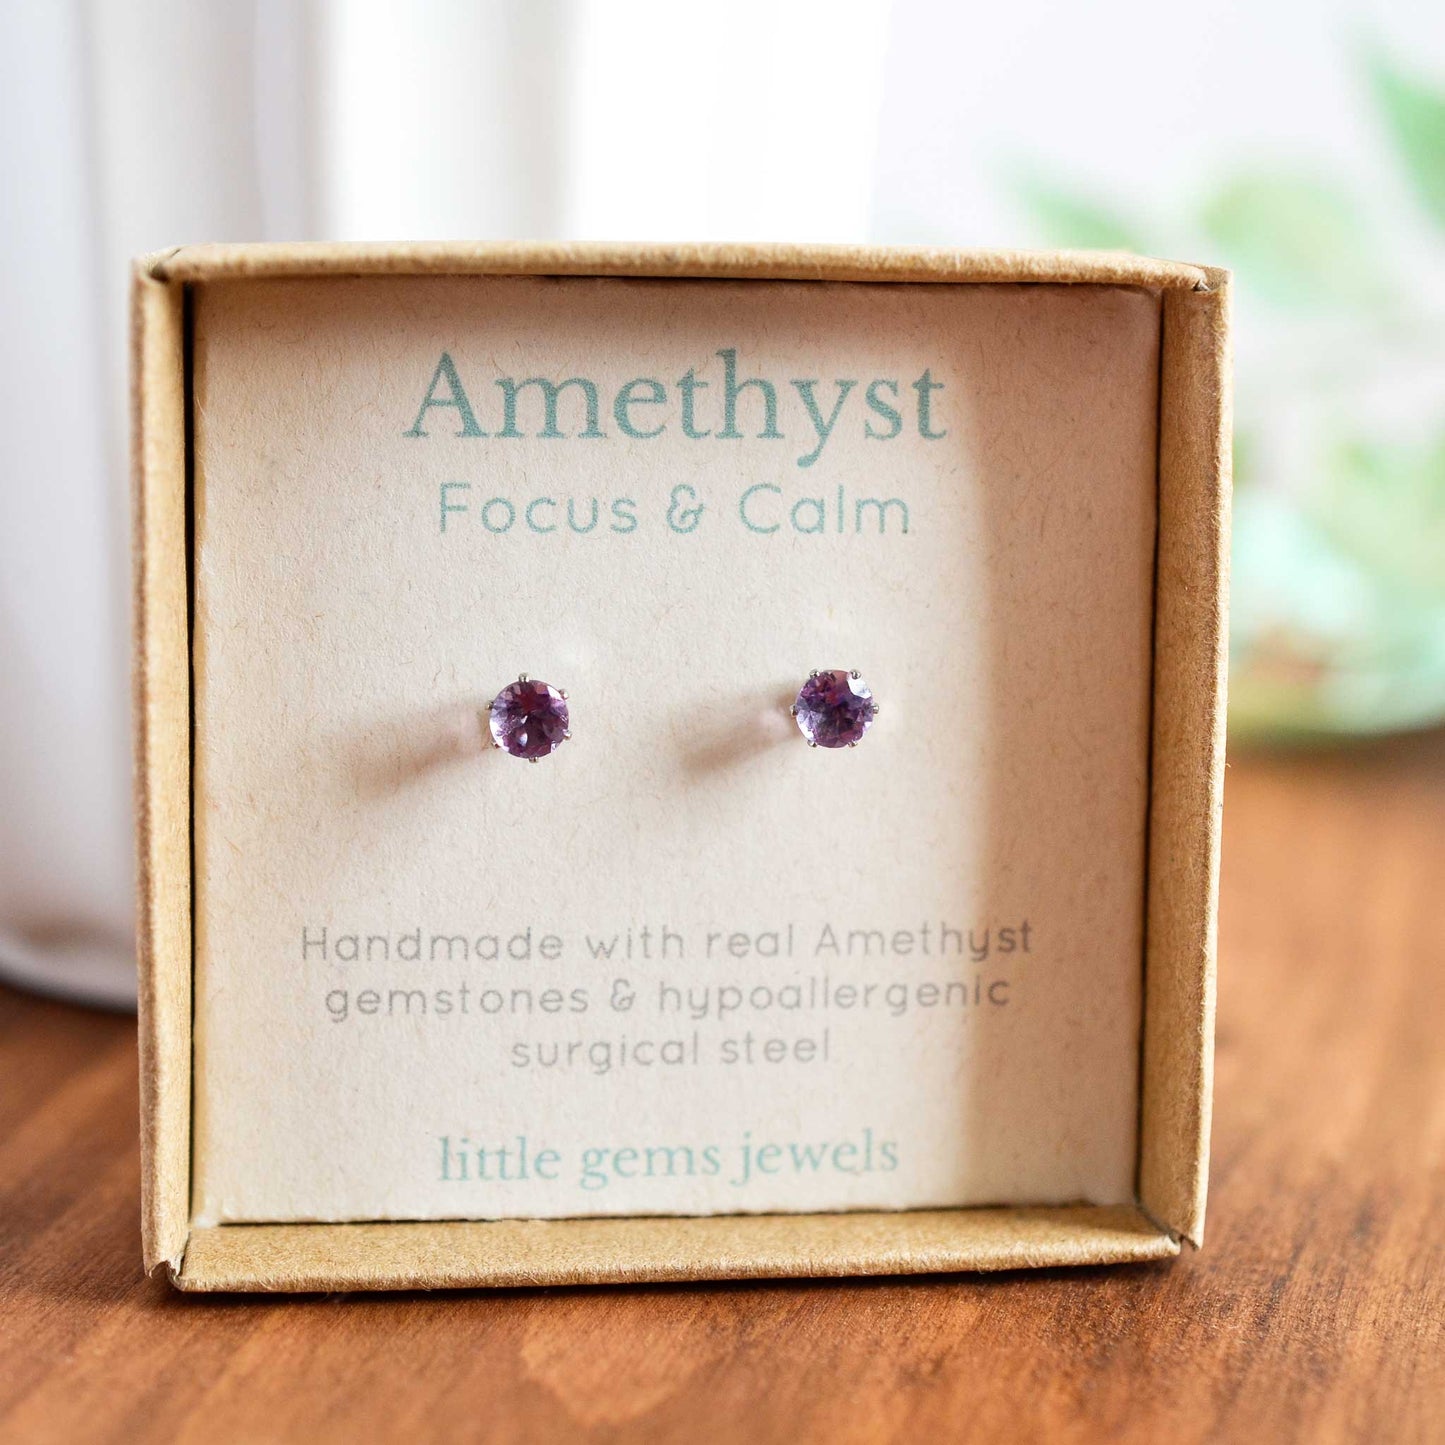 Tiny Amethyst gemstone stud earrings in gift box